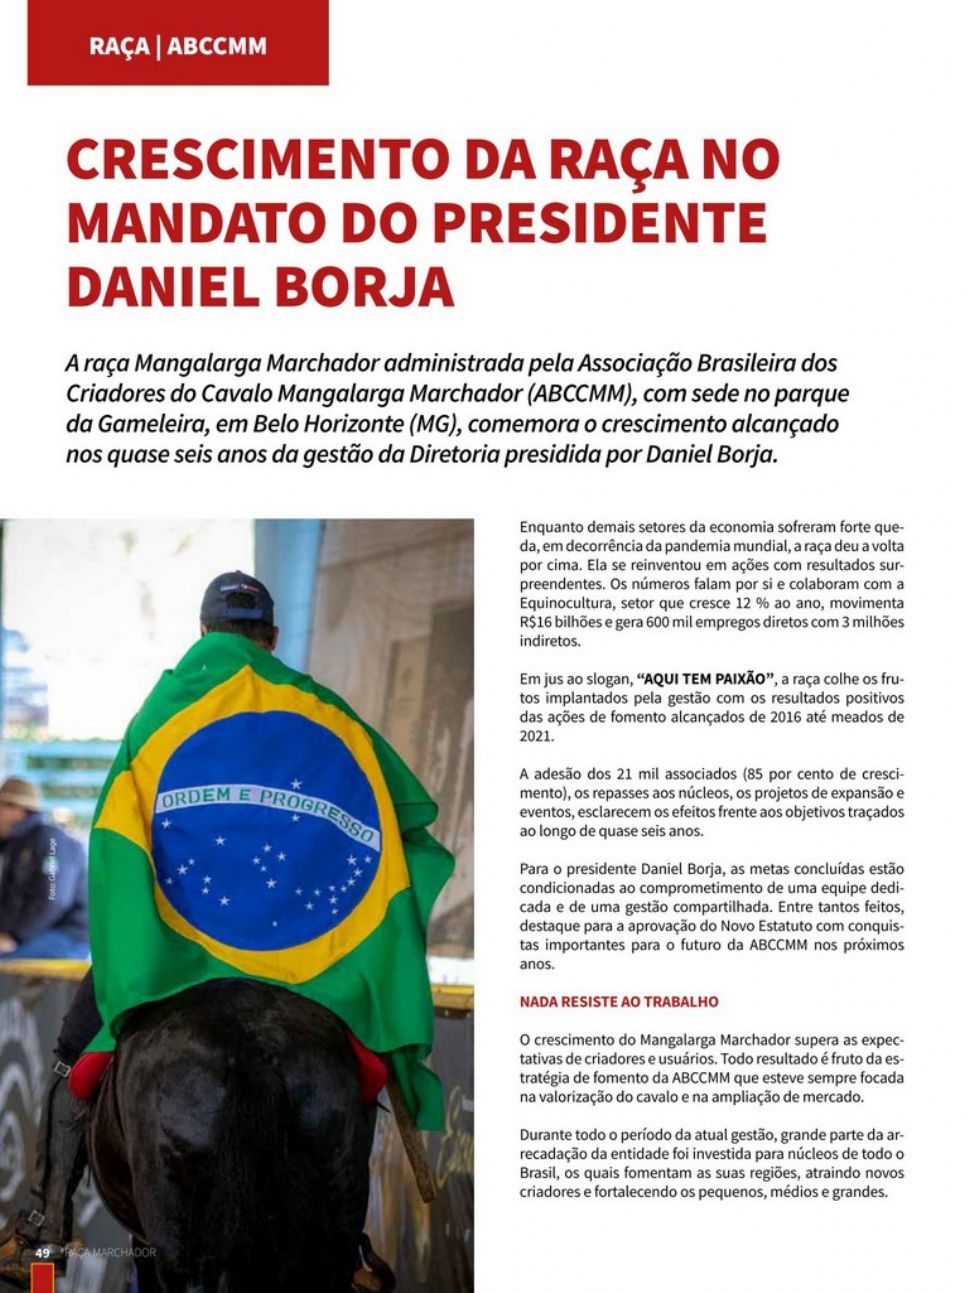 CRESCIMENTO DA RAÇA NO MANDATO DO PRESIDENTE DANIEL BORJA